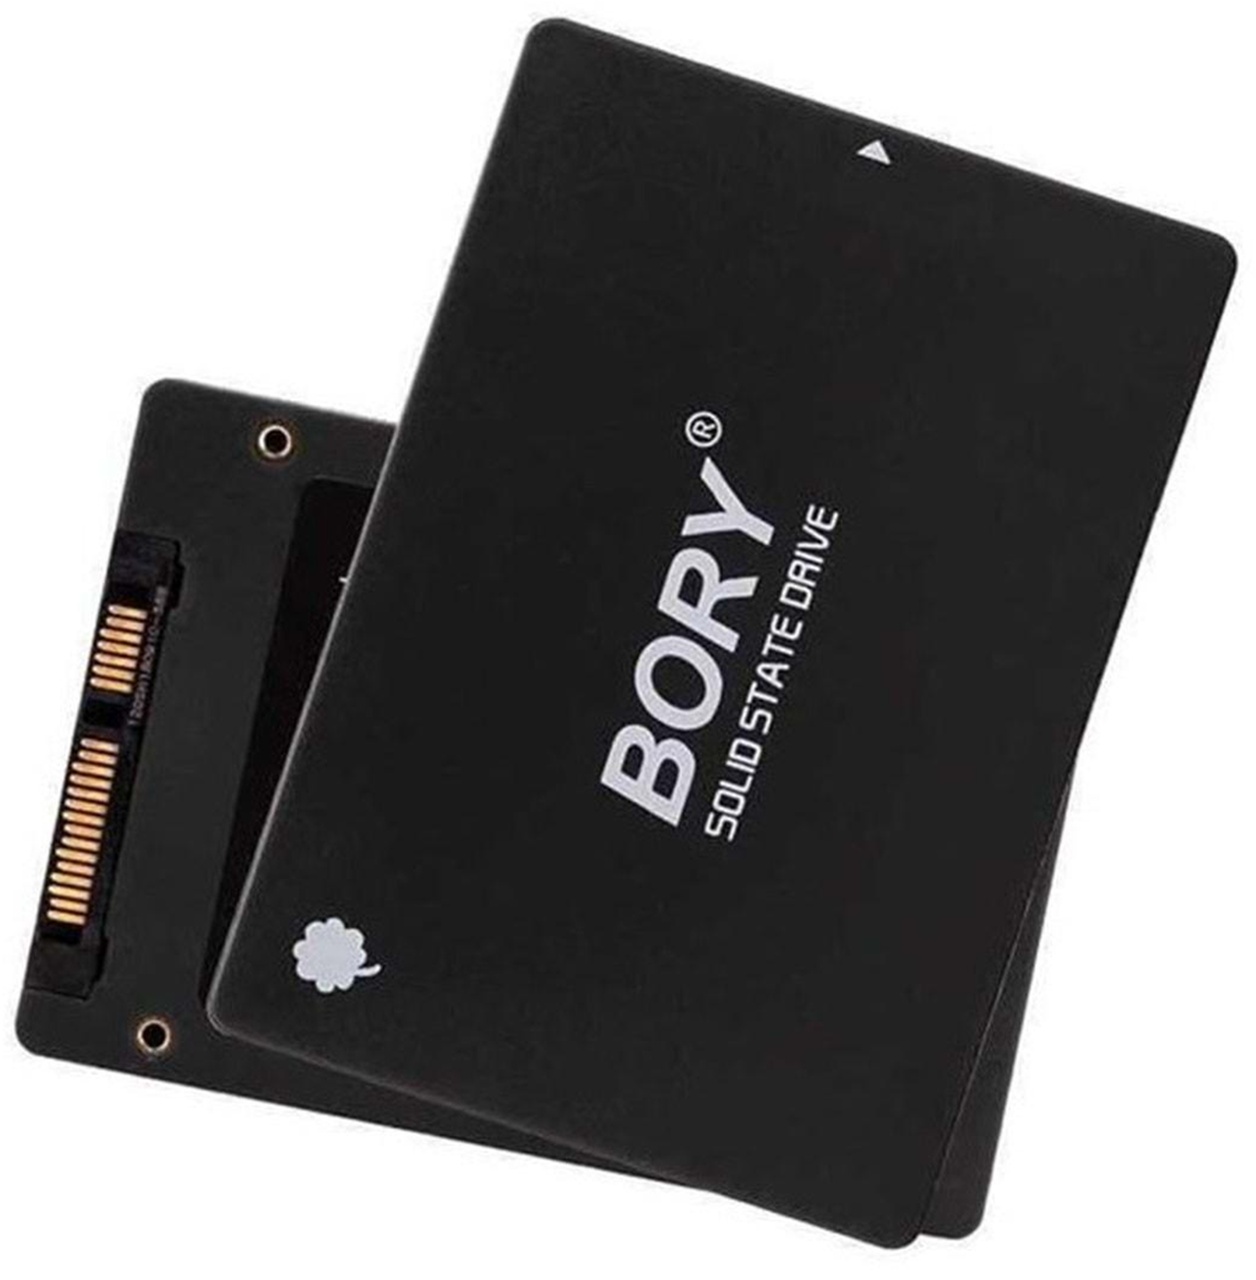 Bory R500-C128G 2.5" 128 GB 550/500 MB/S SATA 3 SSD